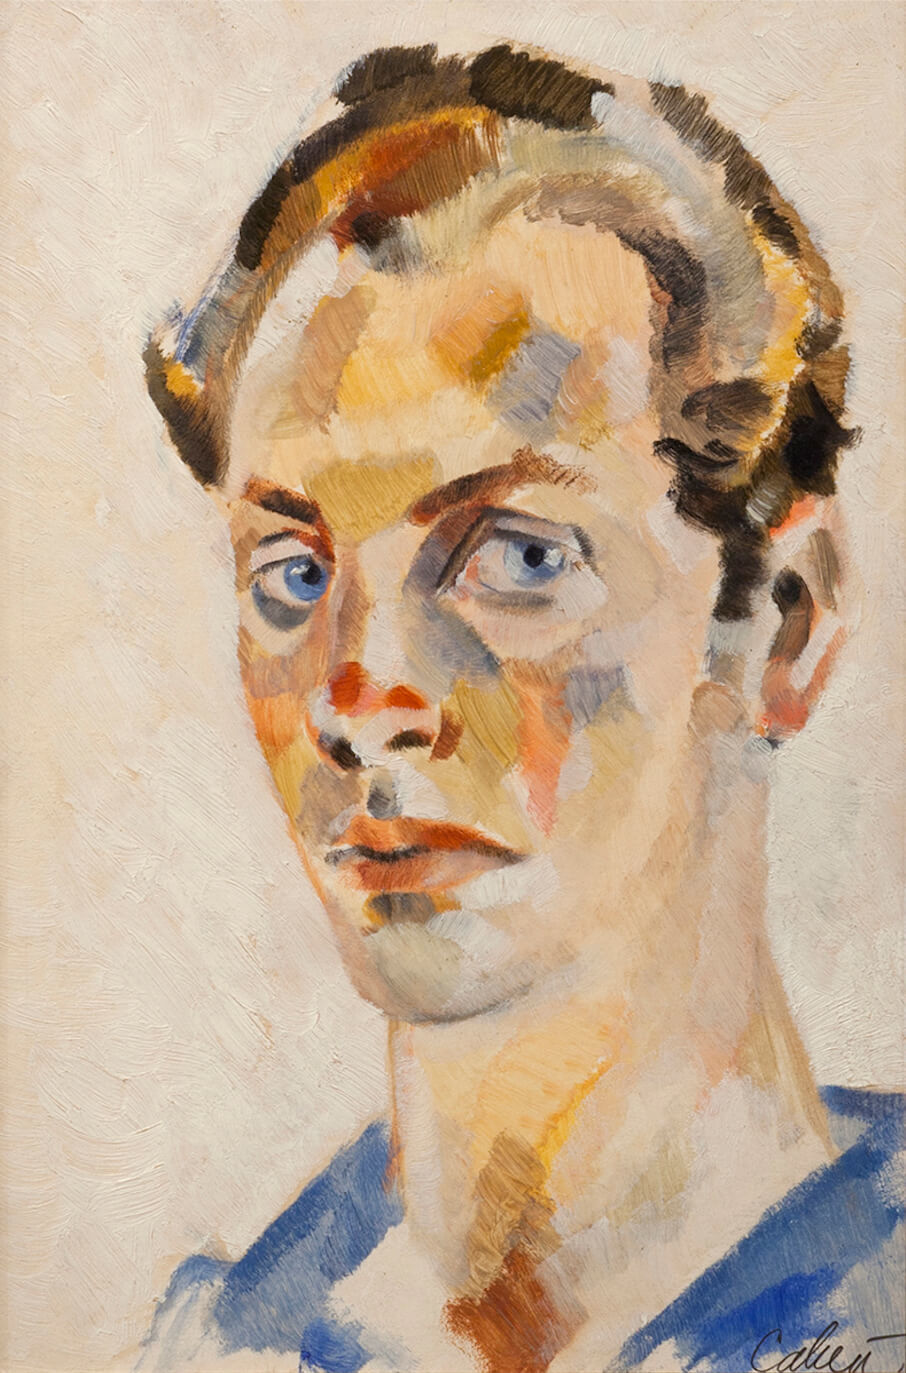 Art Canada Institute, Oscar Cahen, Self-portrait, c. 1930–40